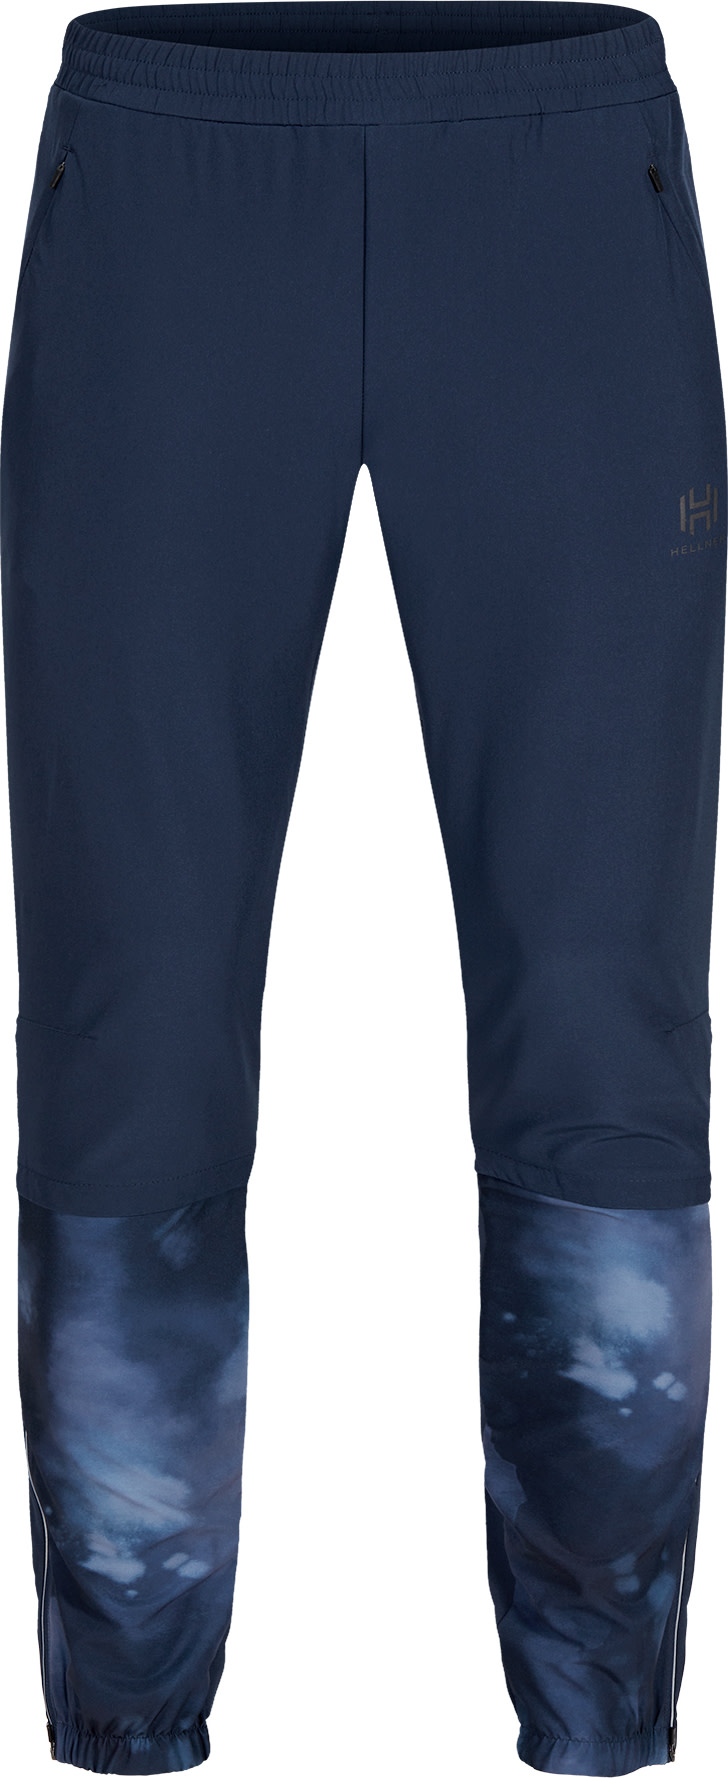 Hellner Men's Harrå Hybrid Pants 2.0 Dress Blue L, Dress Blue